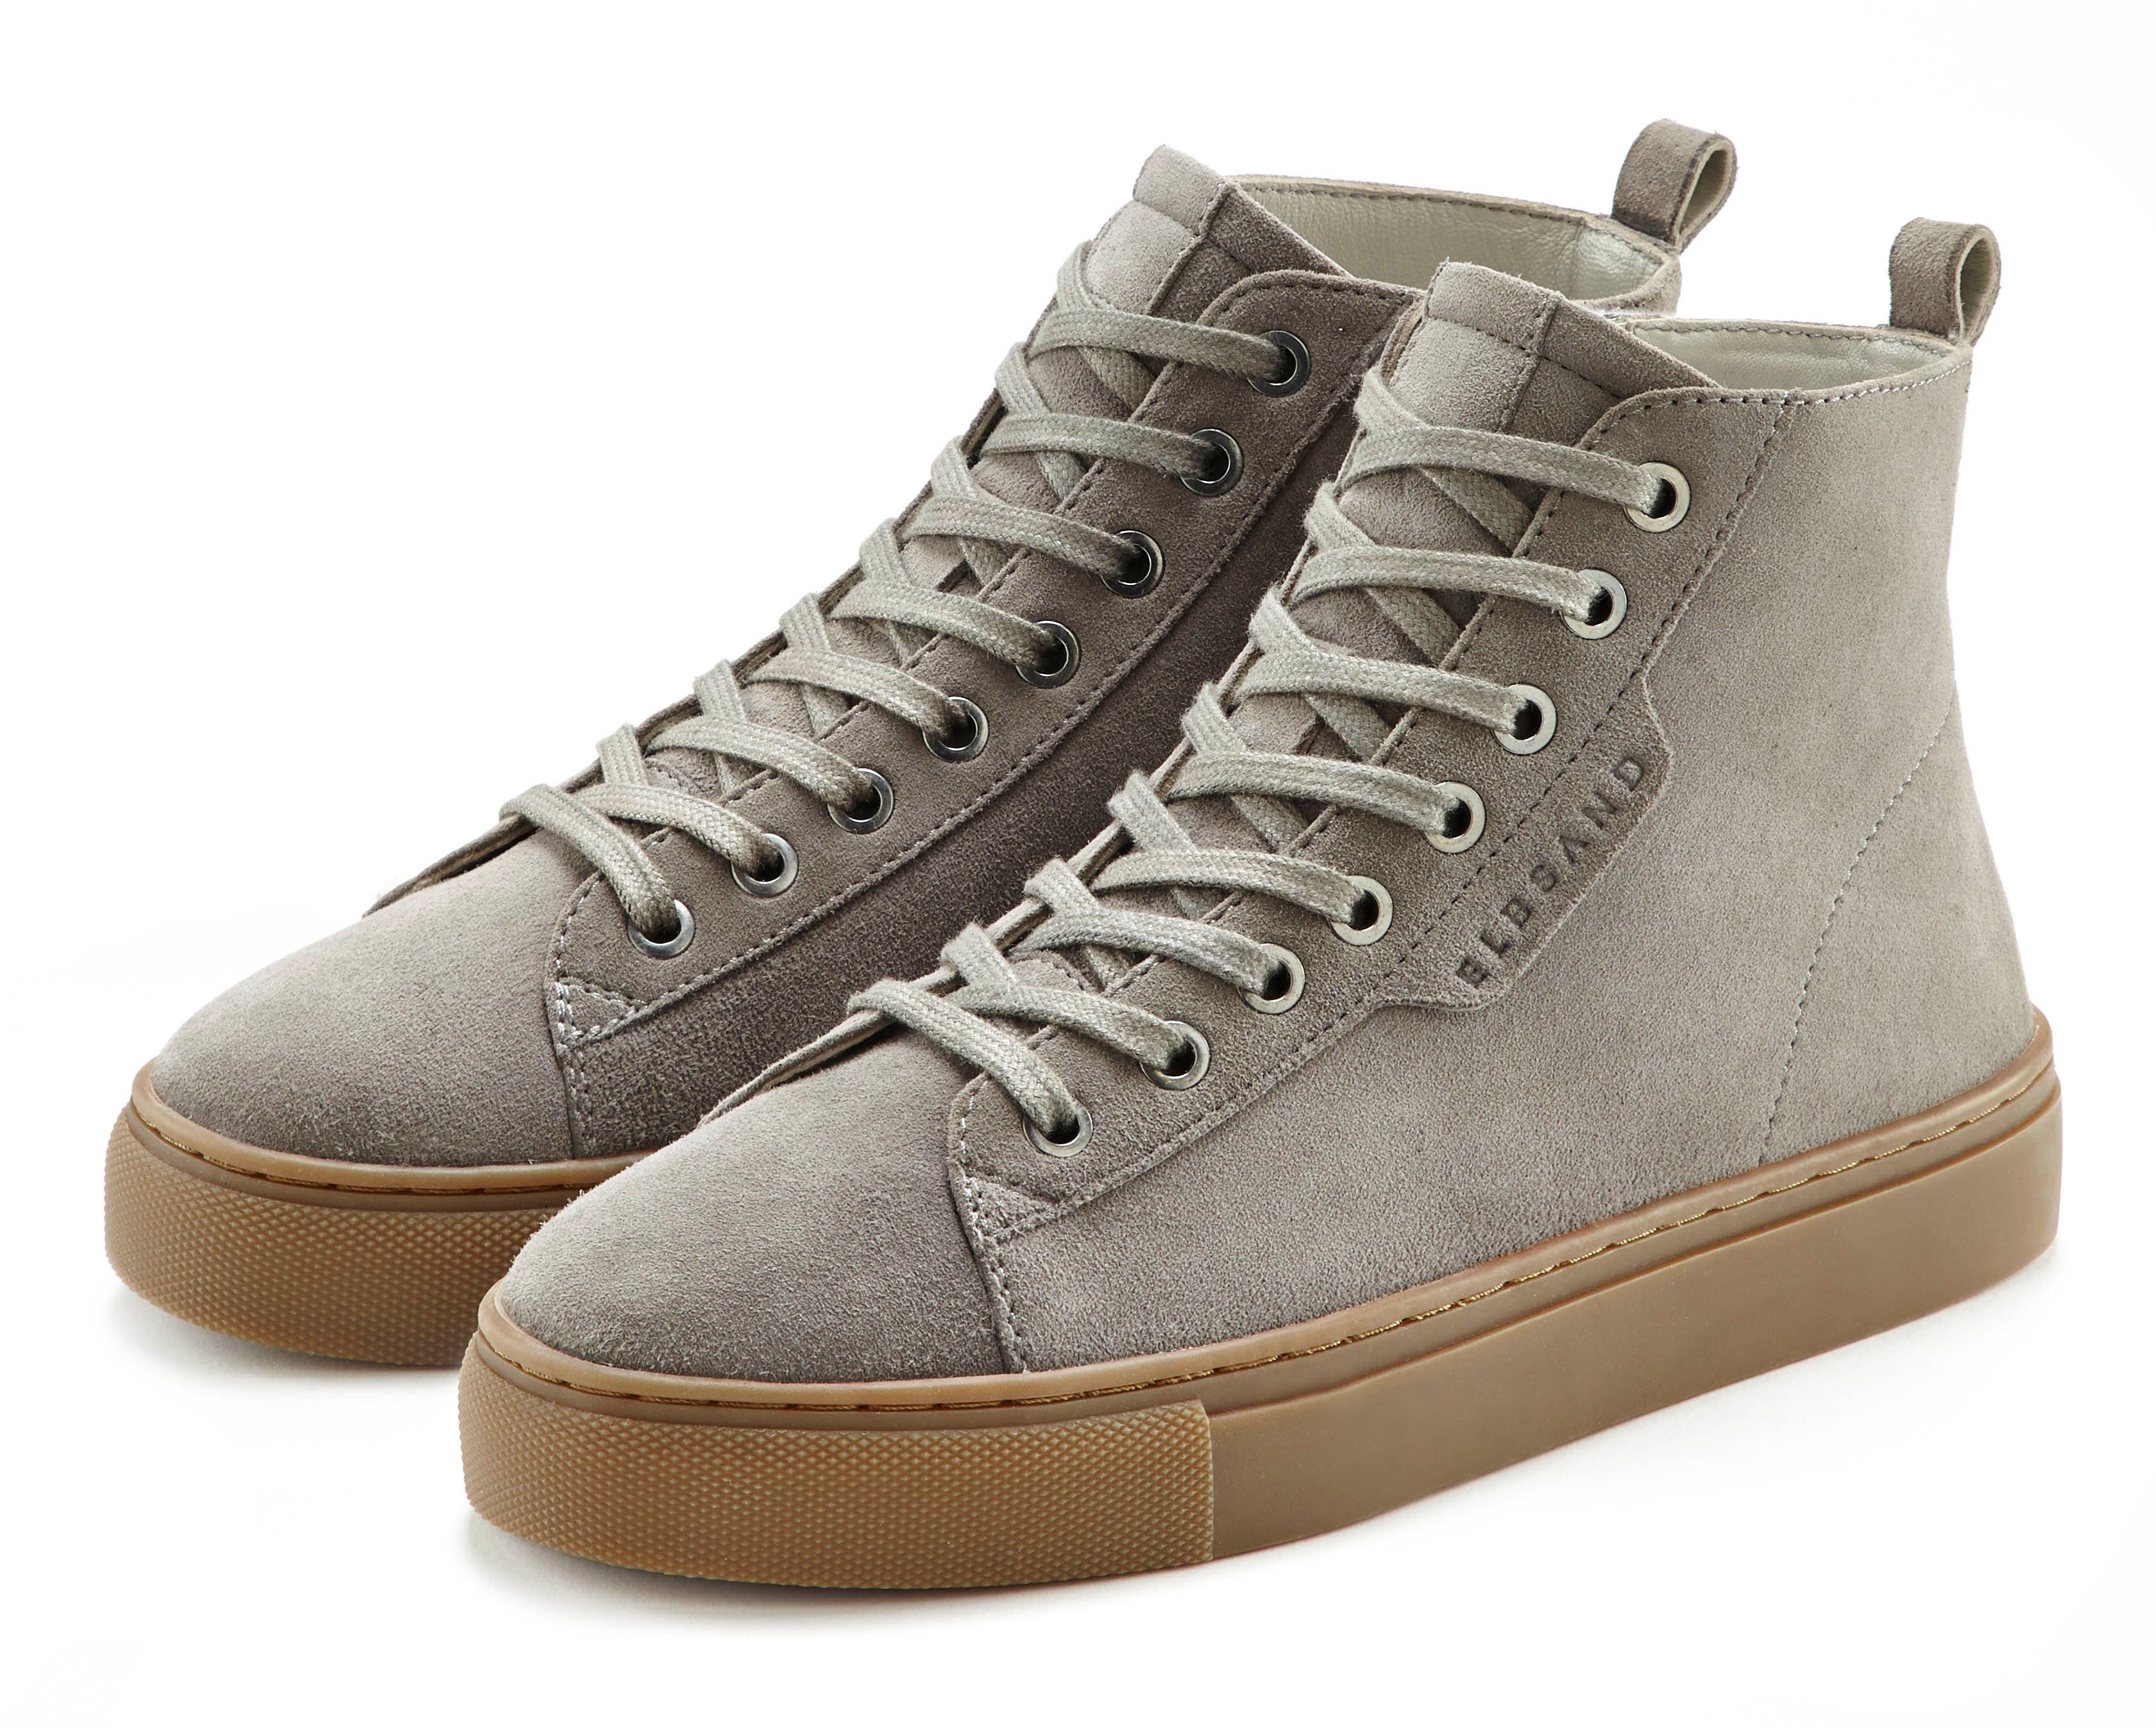 Elbsand Stiefelette Stiefel, Boots, Schnür Sneaker High-Top, weiches Leder, Casual-Look dunkelgrau